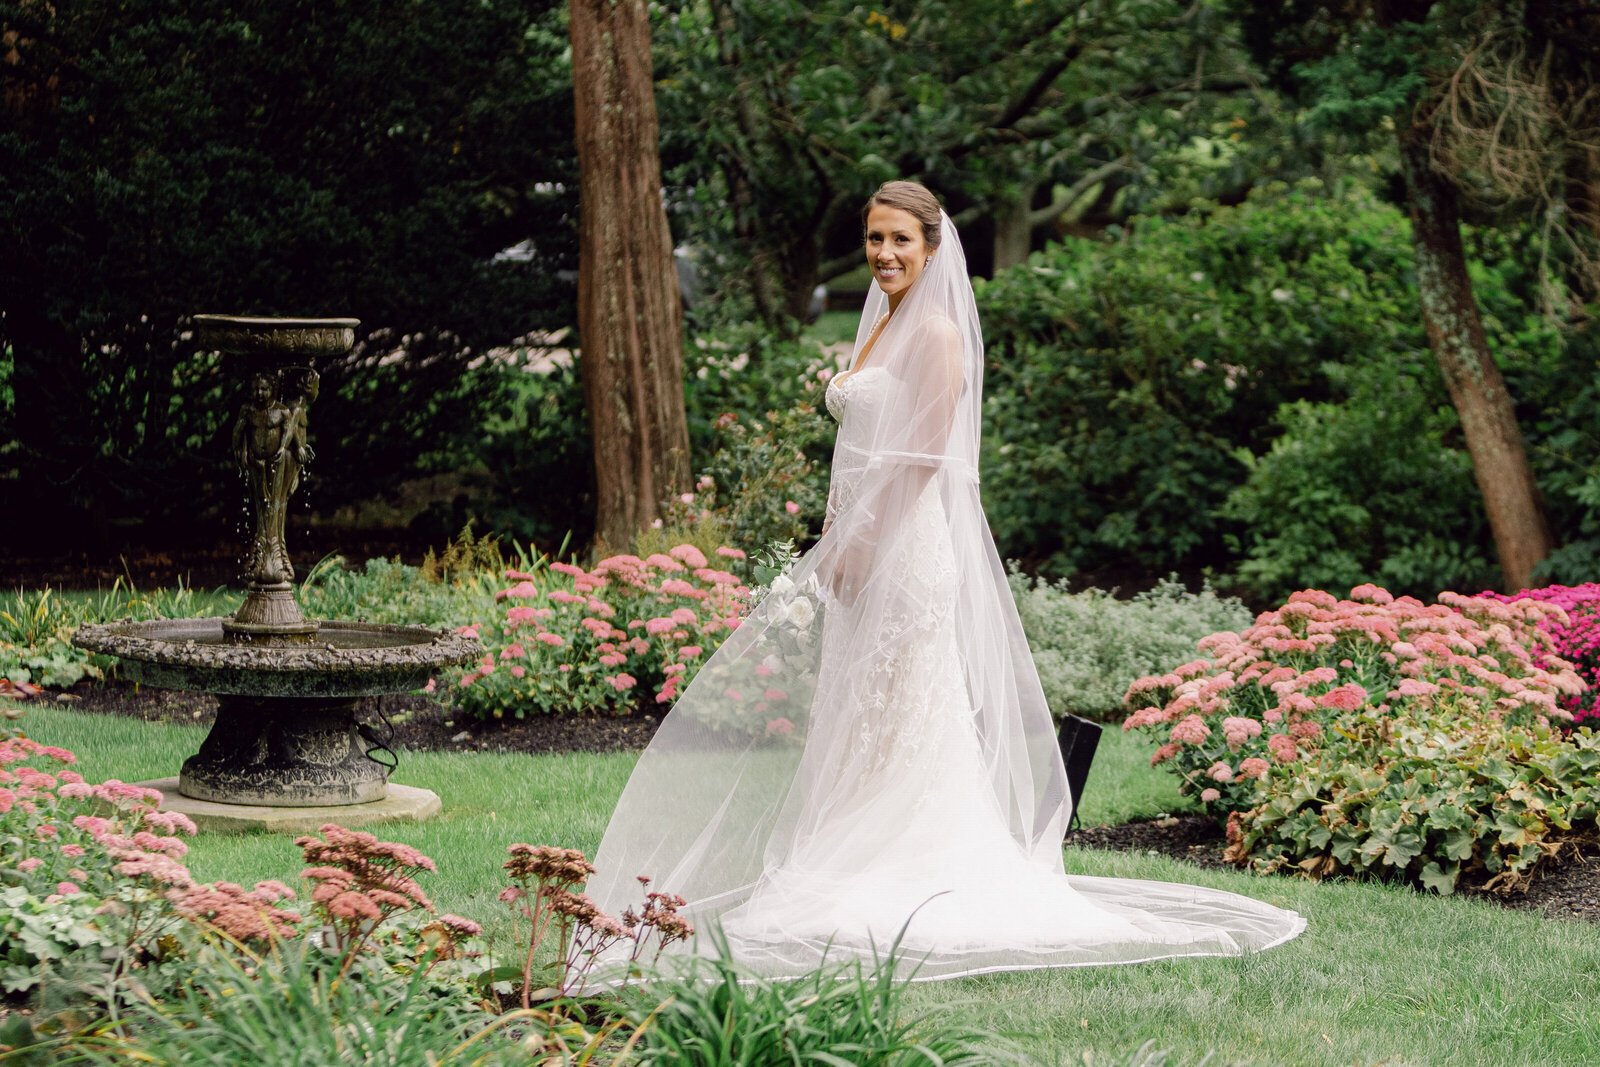 New-England-Wedding-Photographer-Sabrina-Scolari-19